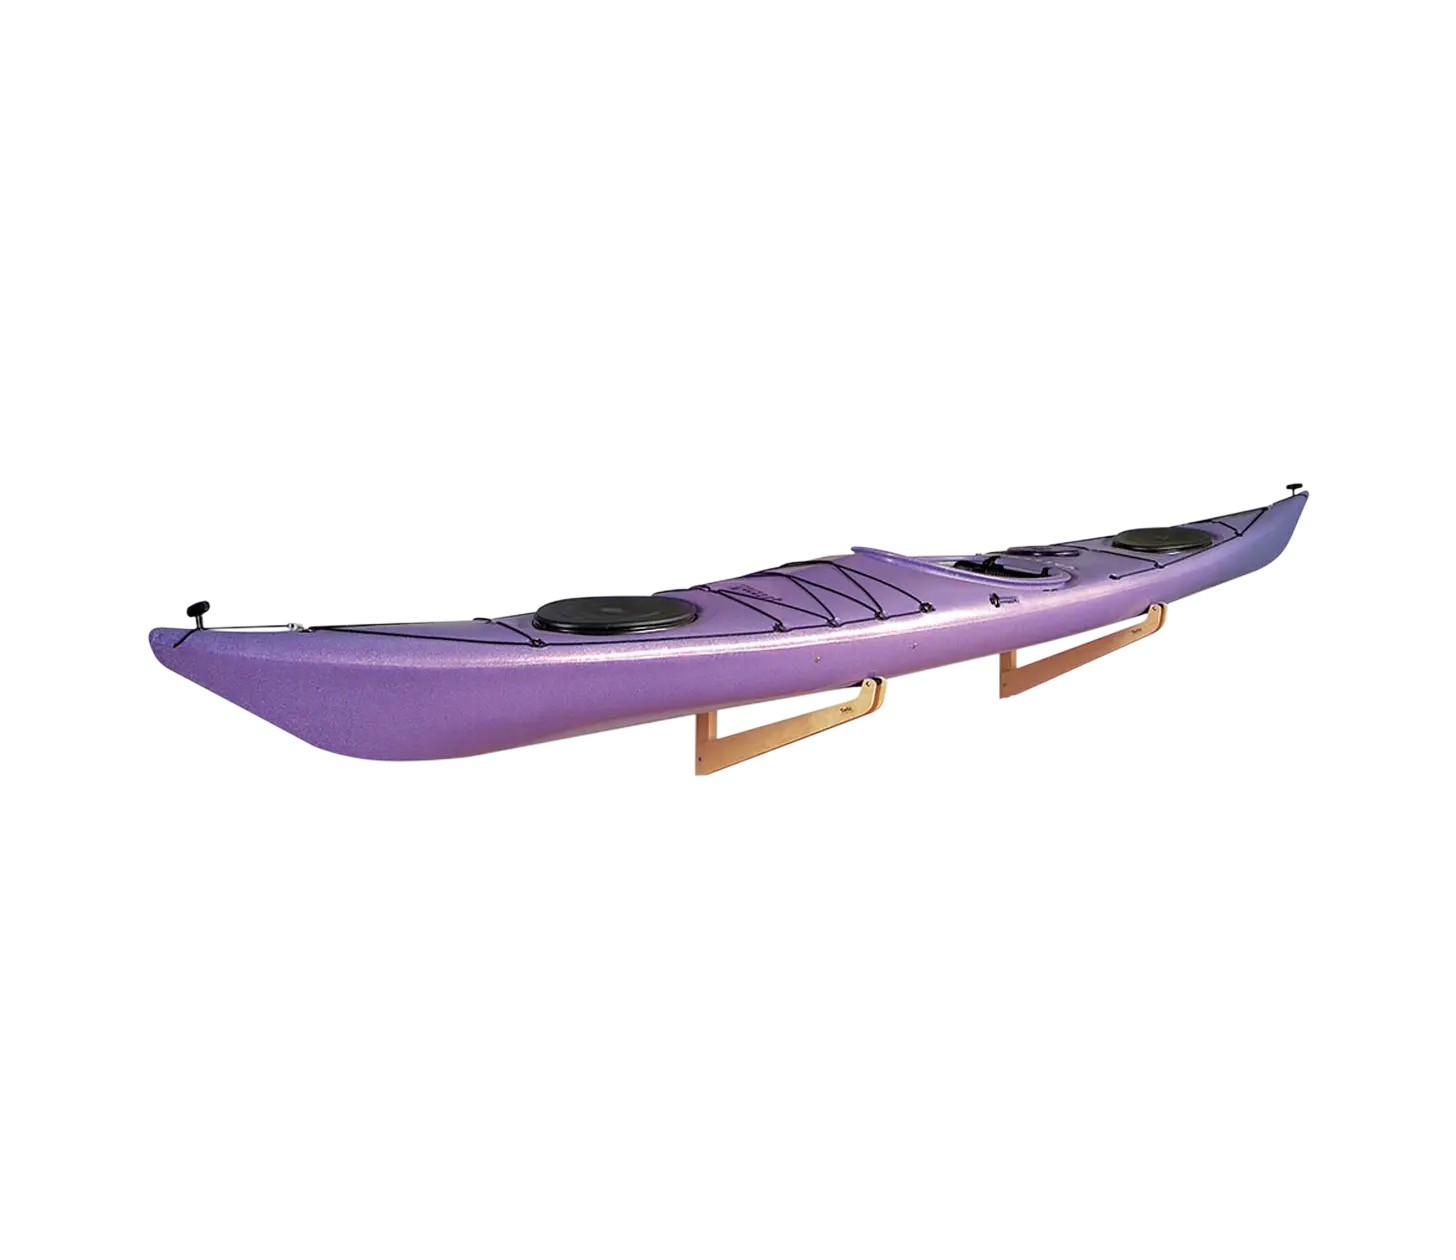 Sea kayak on a Talic storage rack.